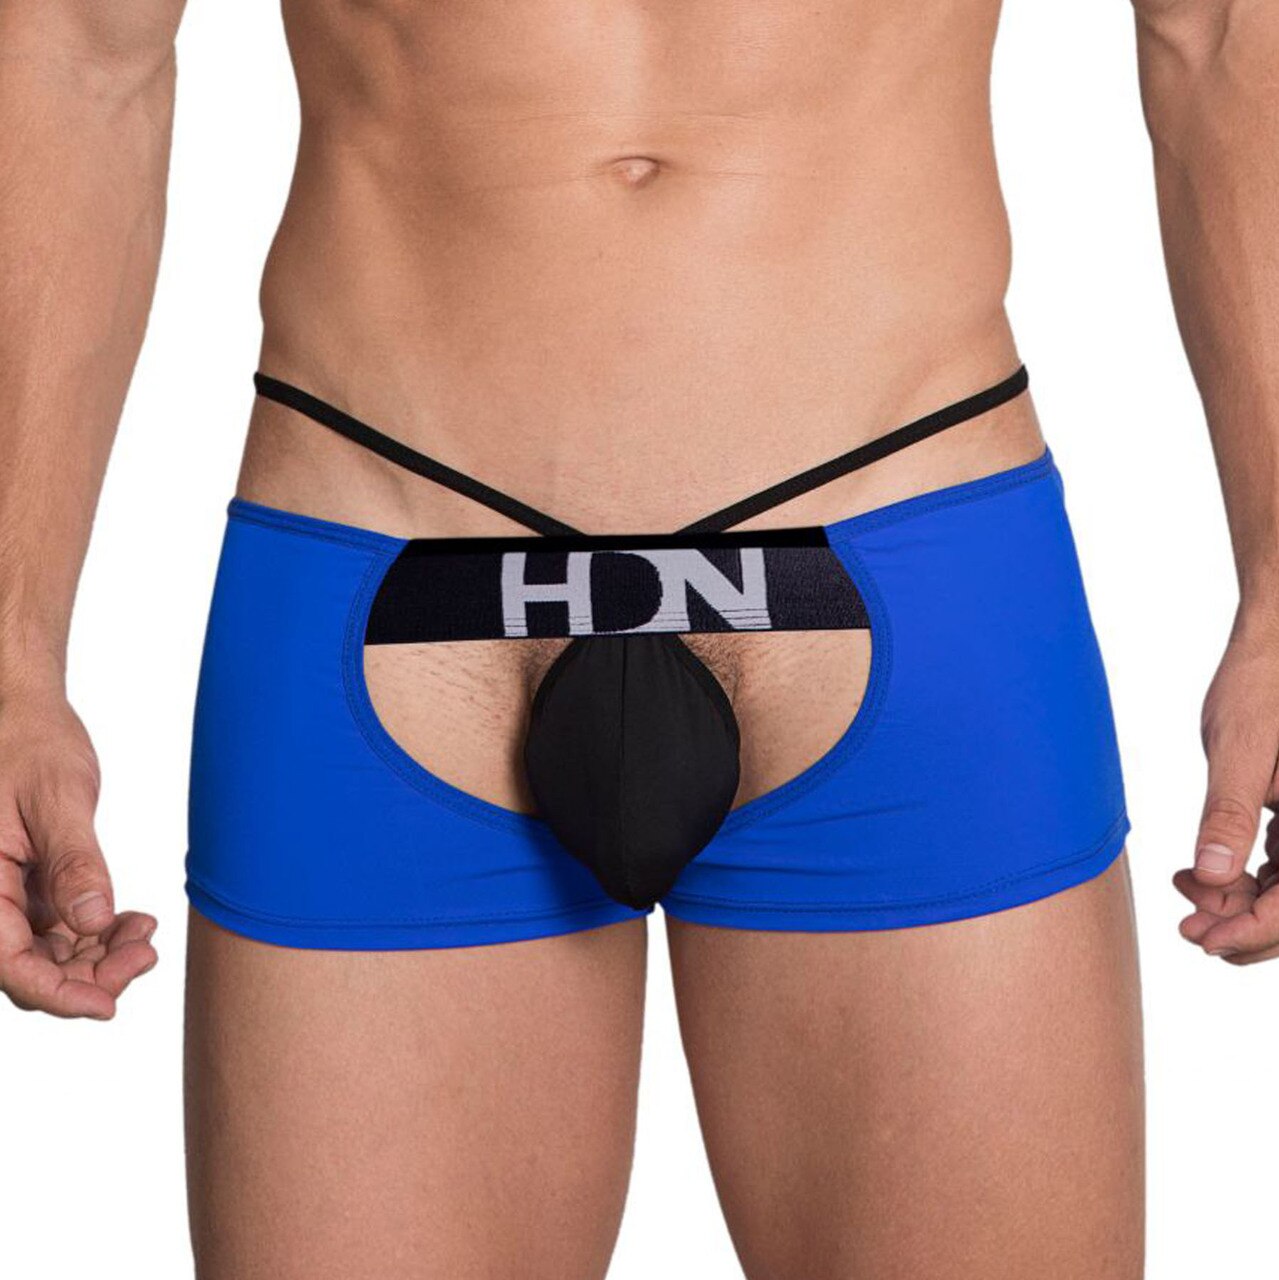 JCSTK - Mens Hidden Seduction Open Front & Back Hot Pants with G string Black and Blue